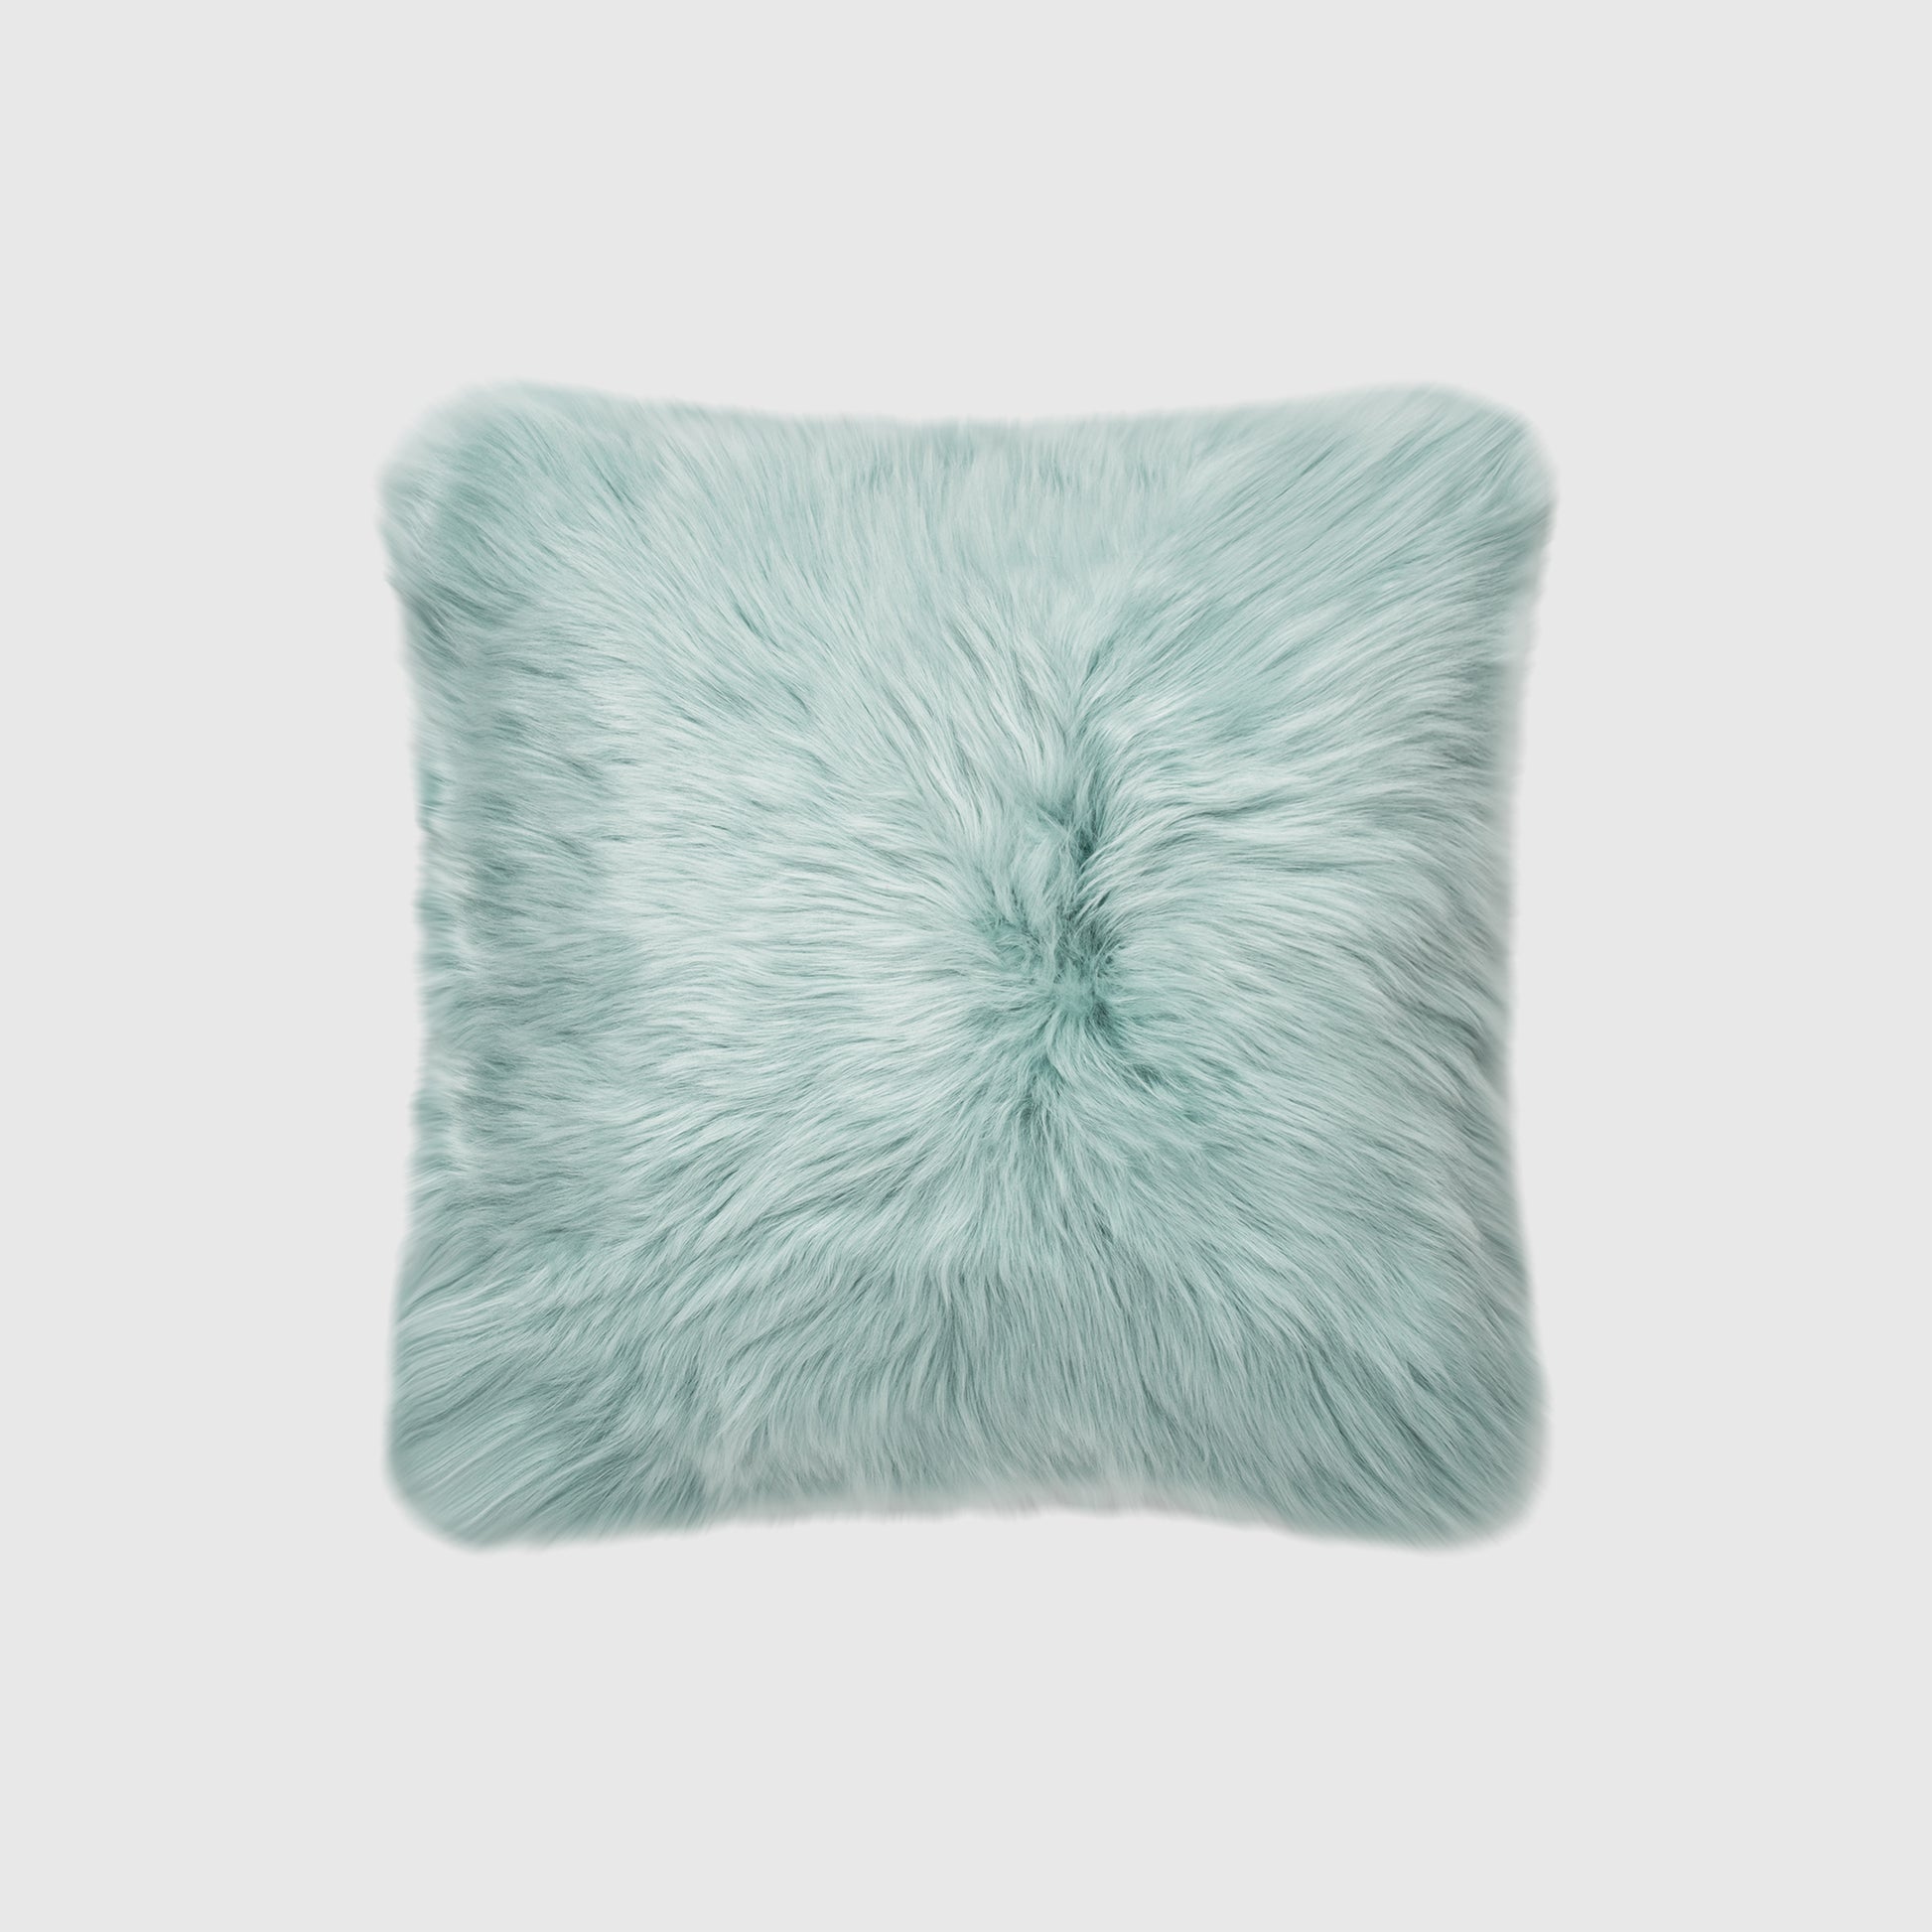 The Mood | Charlie Sheepskin Double-sided 16"x16" Pillow, Eggshell Blue